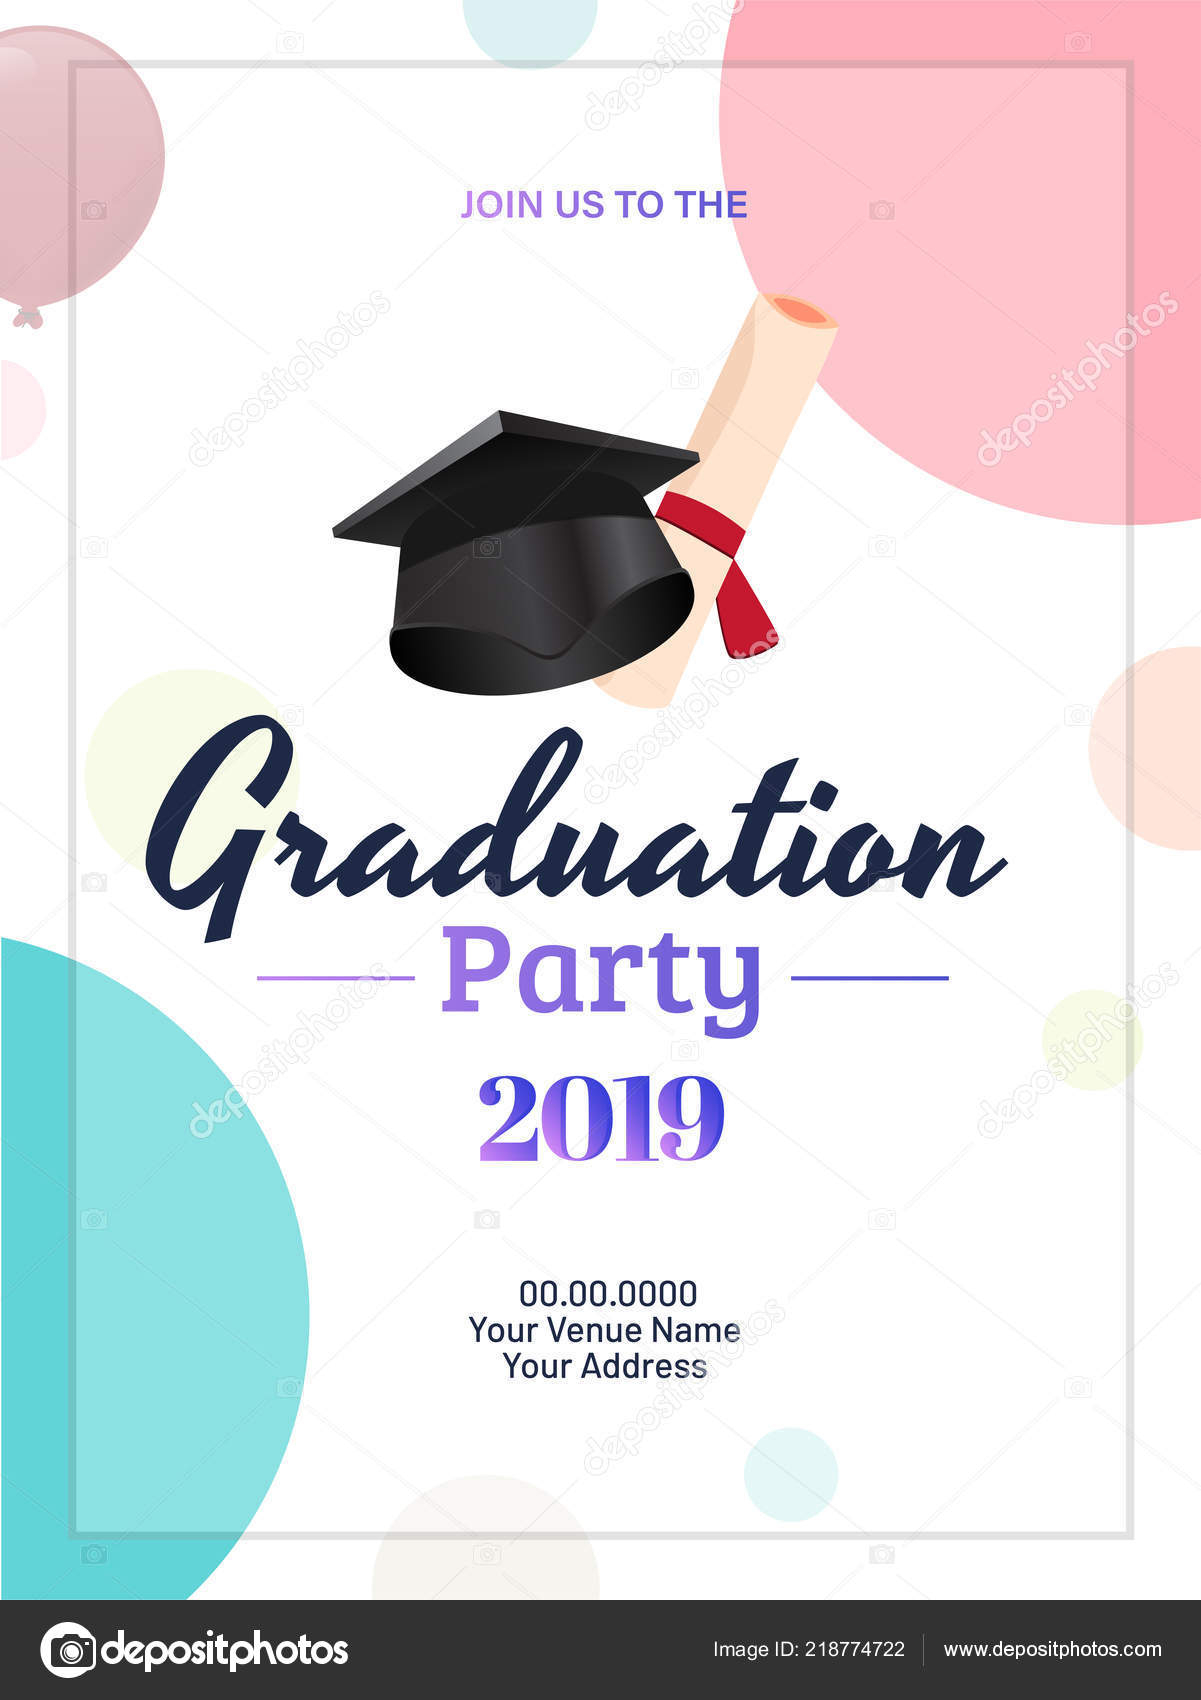 Graduation Party 2019 Invitation Card Template Design Illustration throughout measurements 1201 X 1700